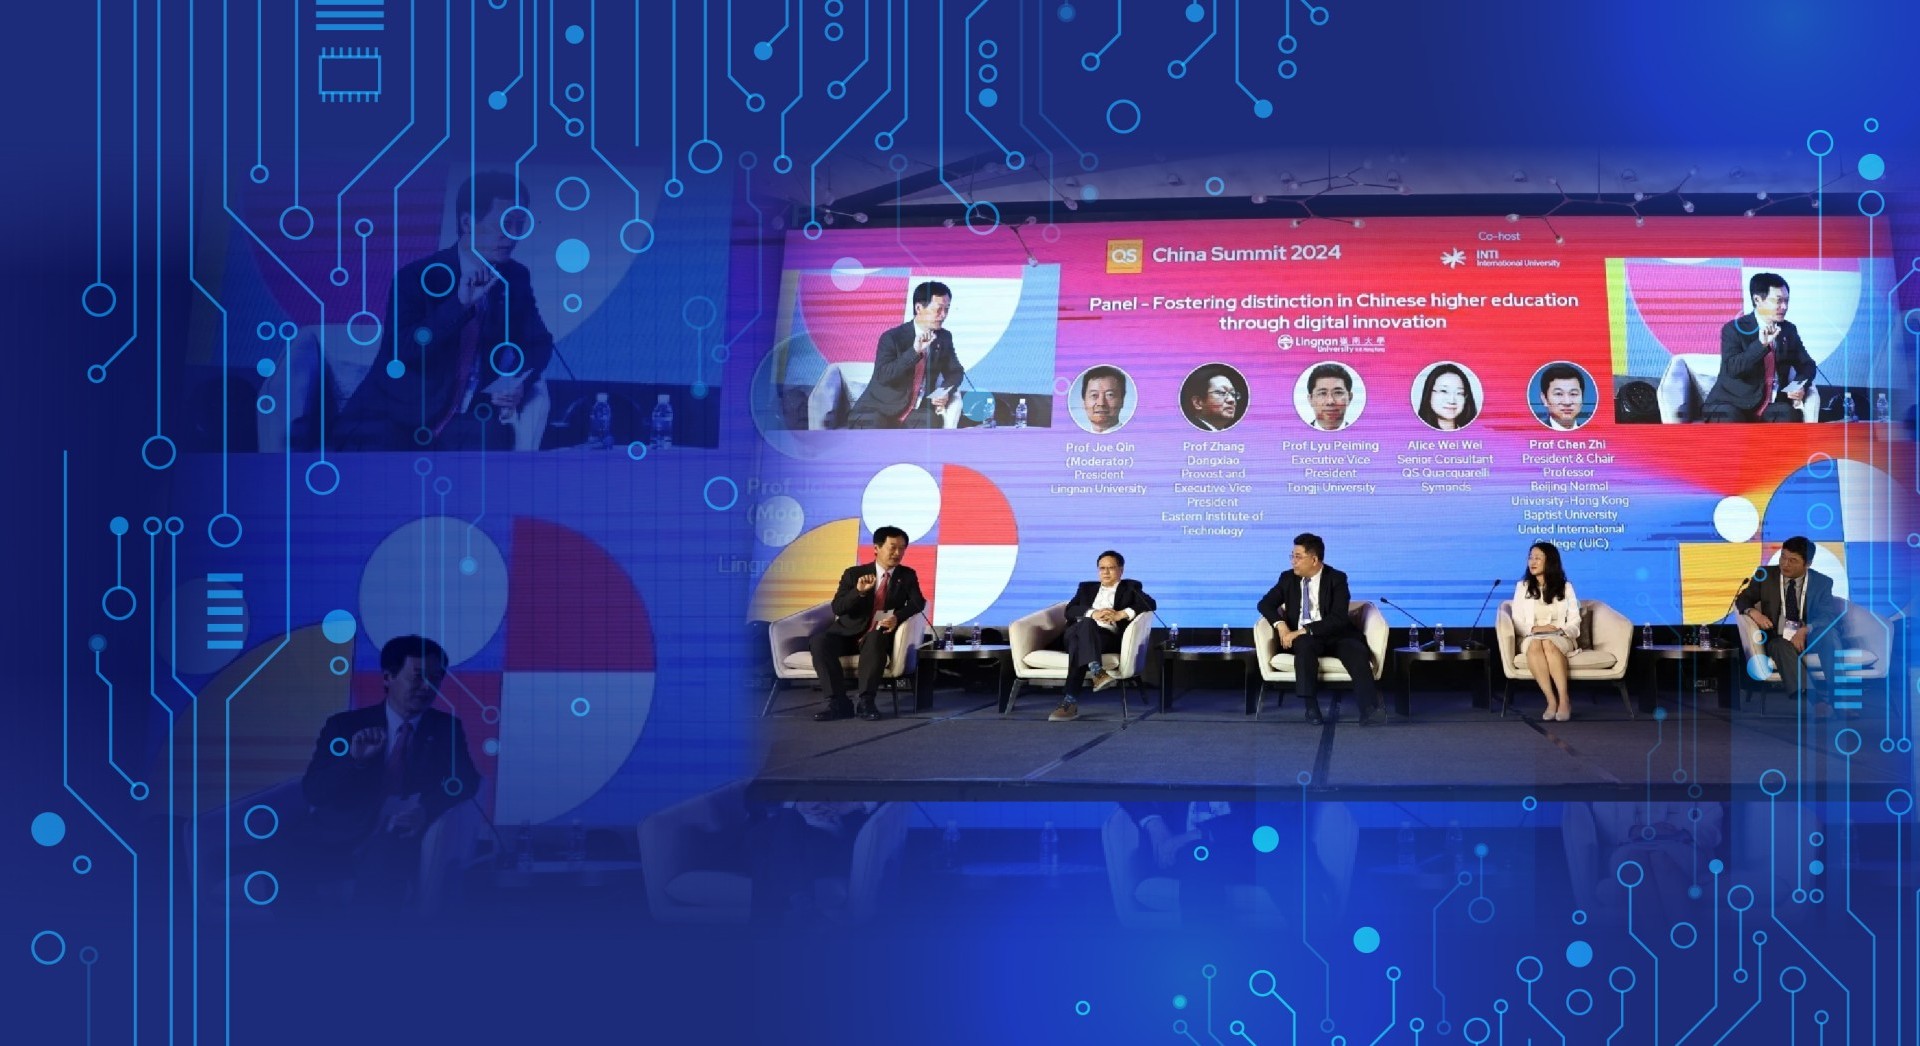 Lingnan’s President leads QS Summit panel on digital innovation